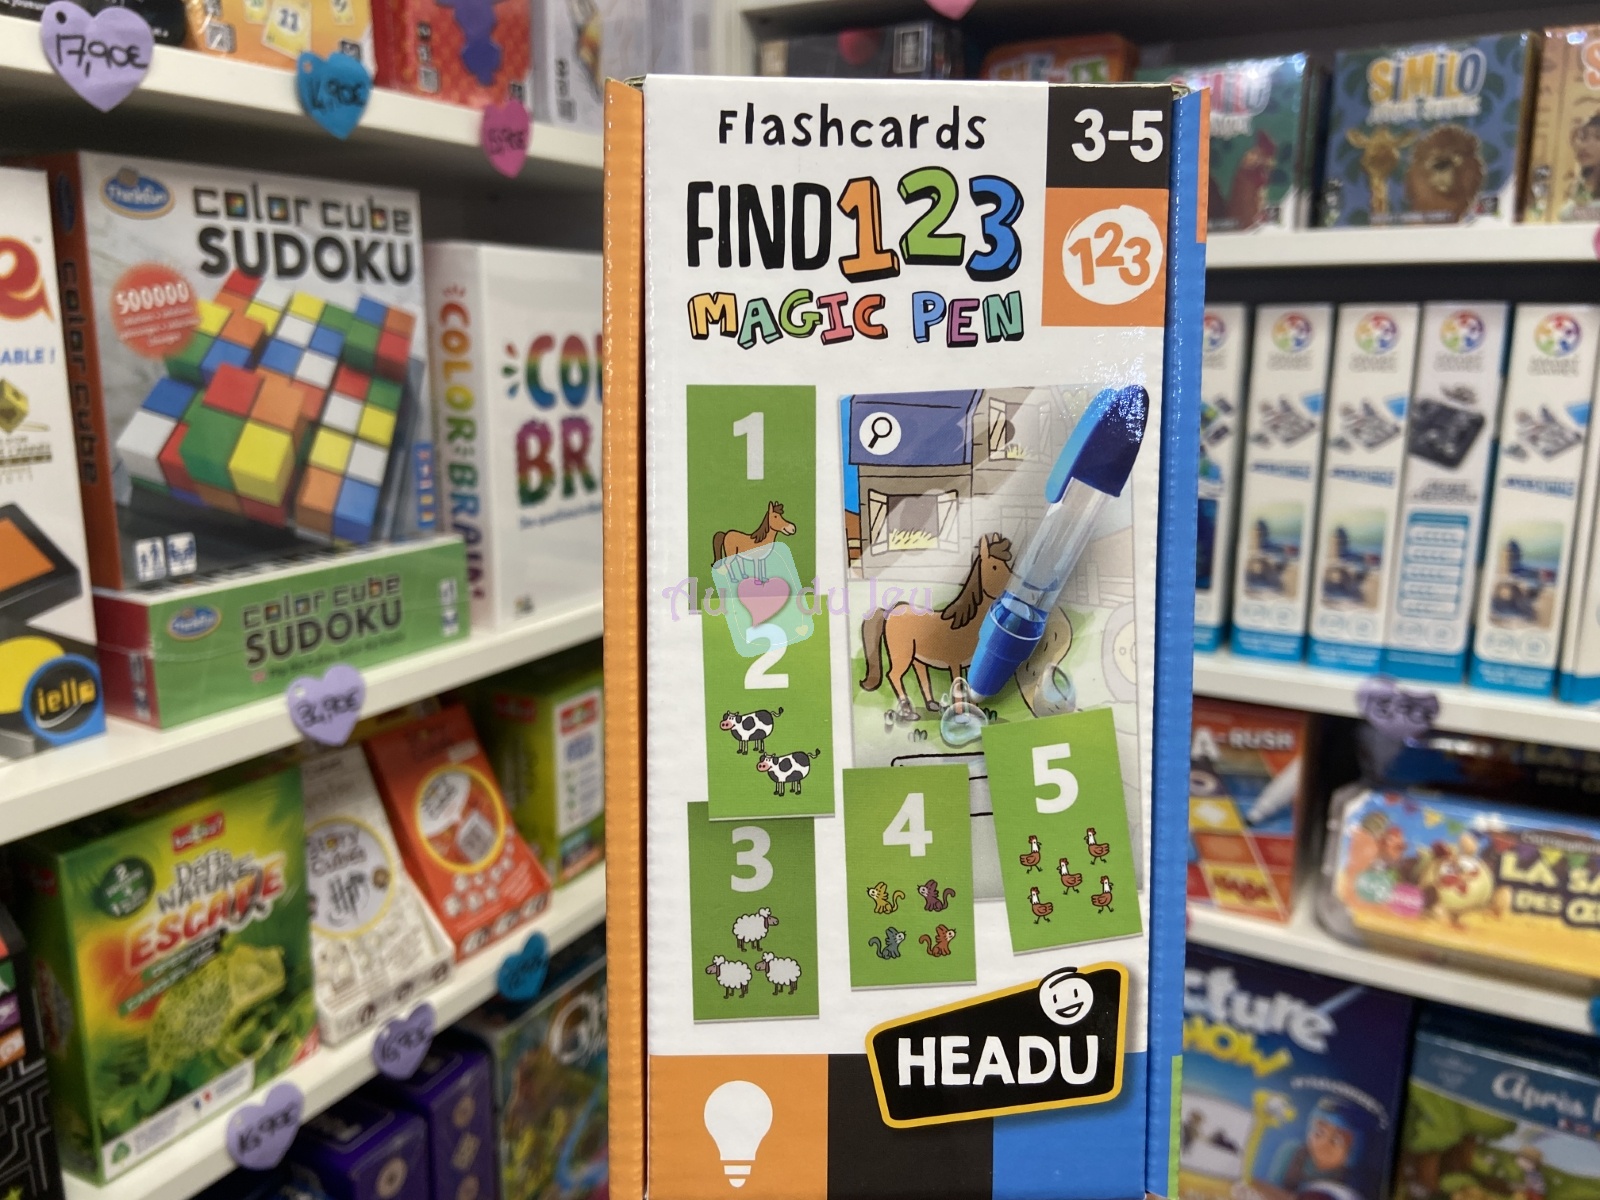 Flashcards Find 123 Magic Pen Headu